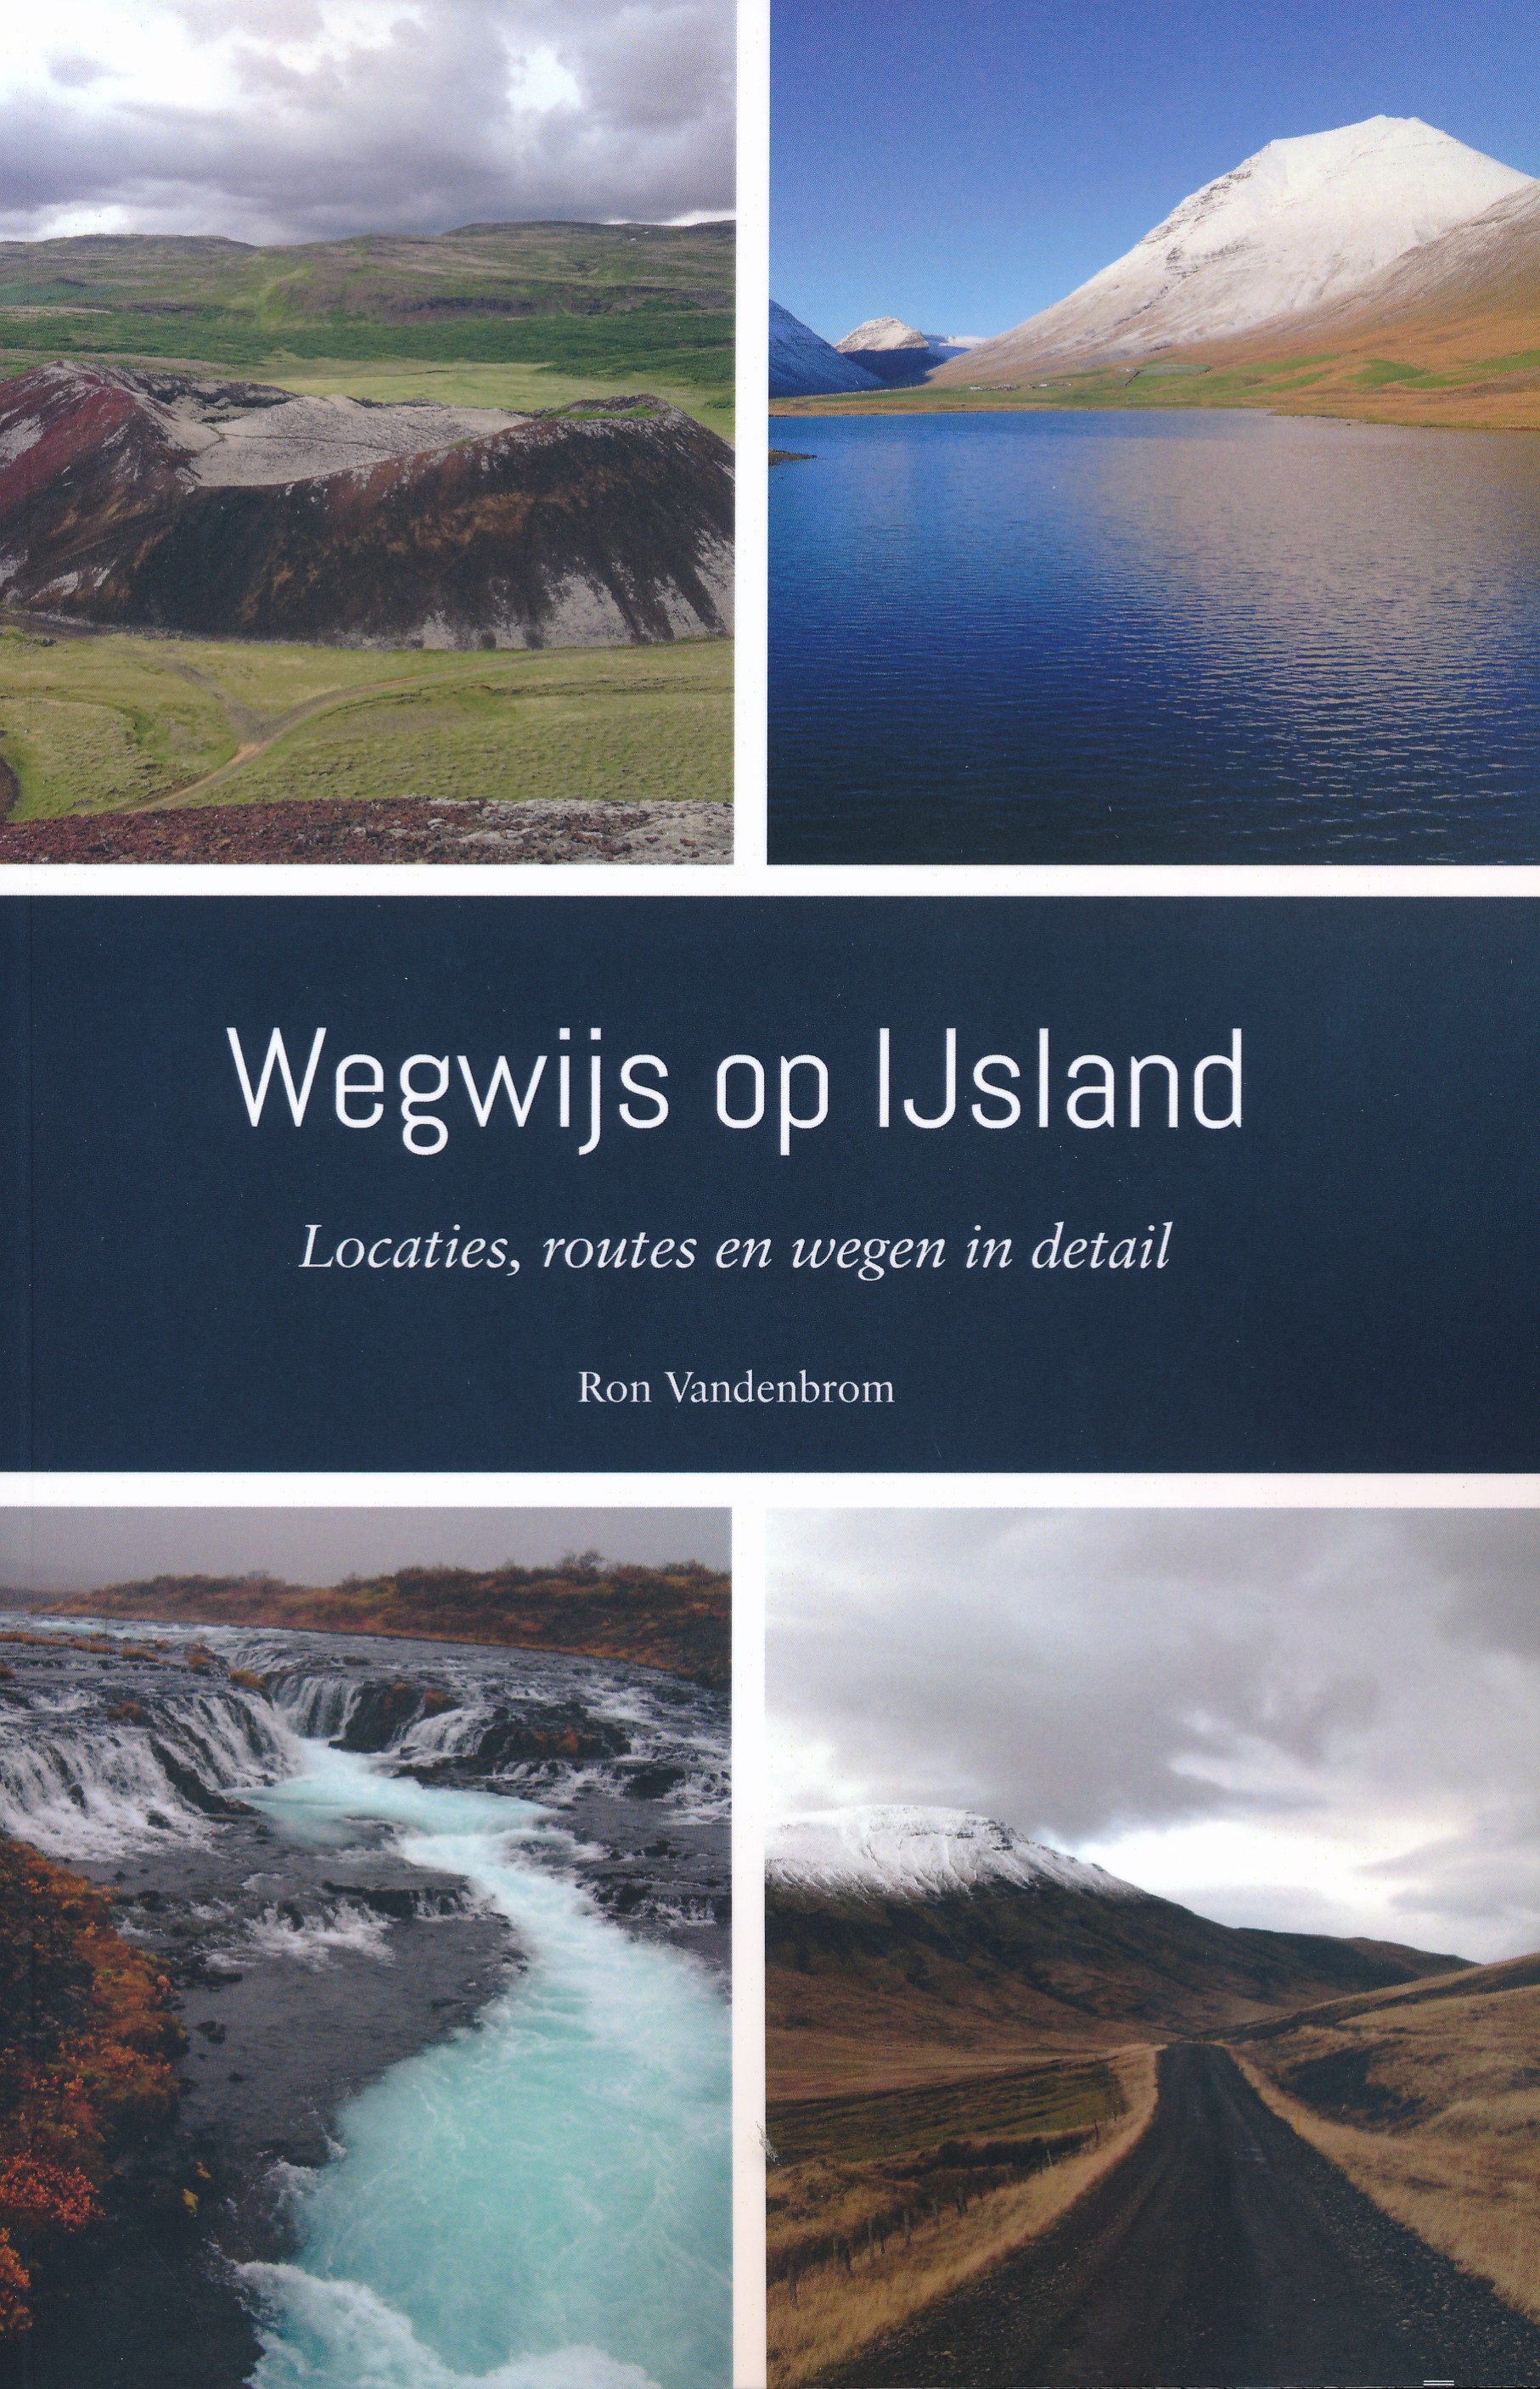 Online bestellen: Reisgids Wegwijs op IJsland | Boekscout